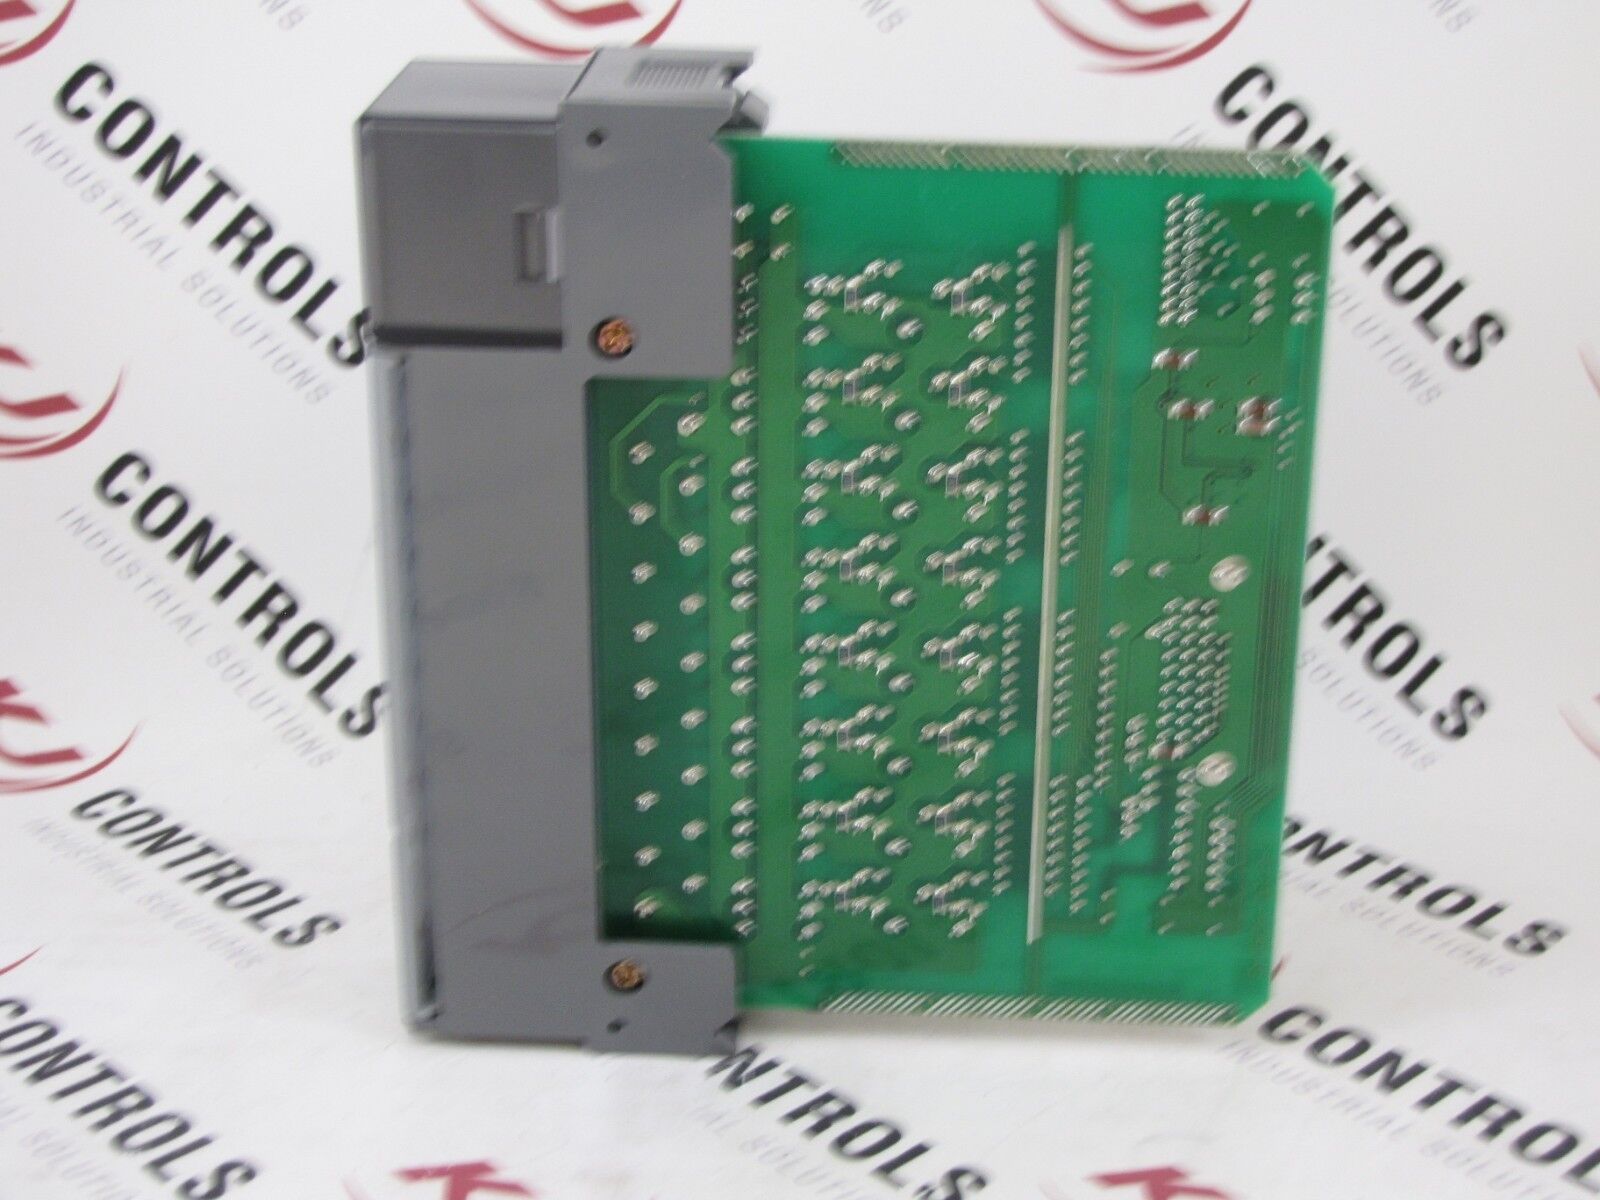 Allen-Bradley 1746-OV16 SLC-500 16-Channel Digital Output Module 10-50VDC